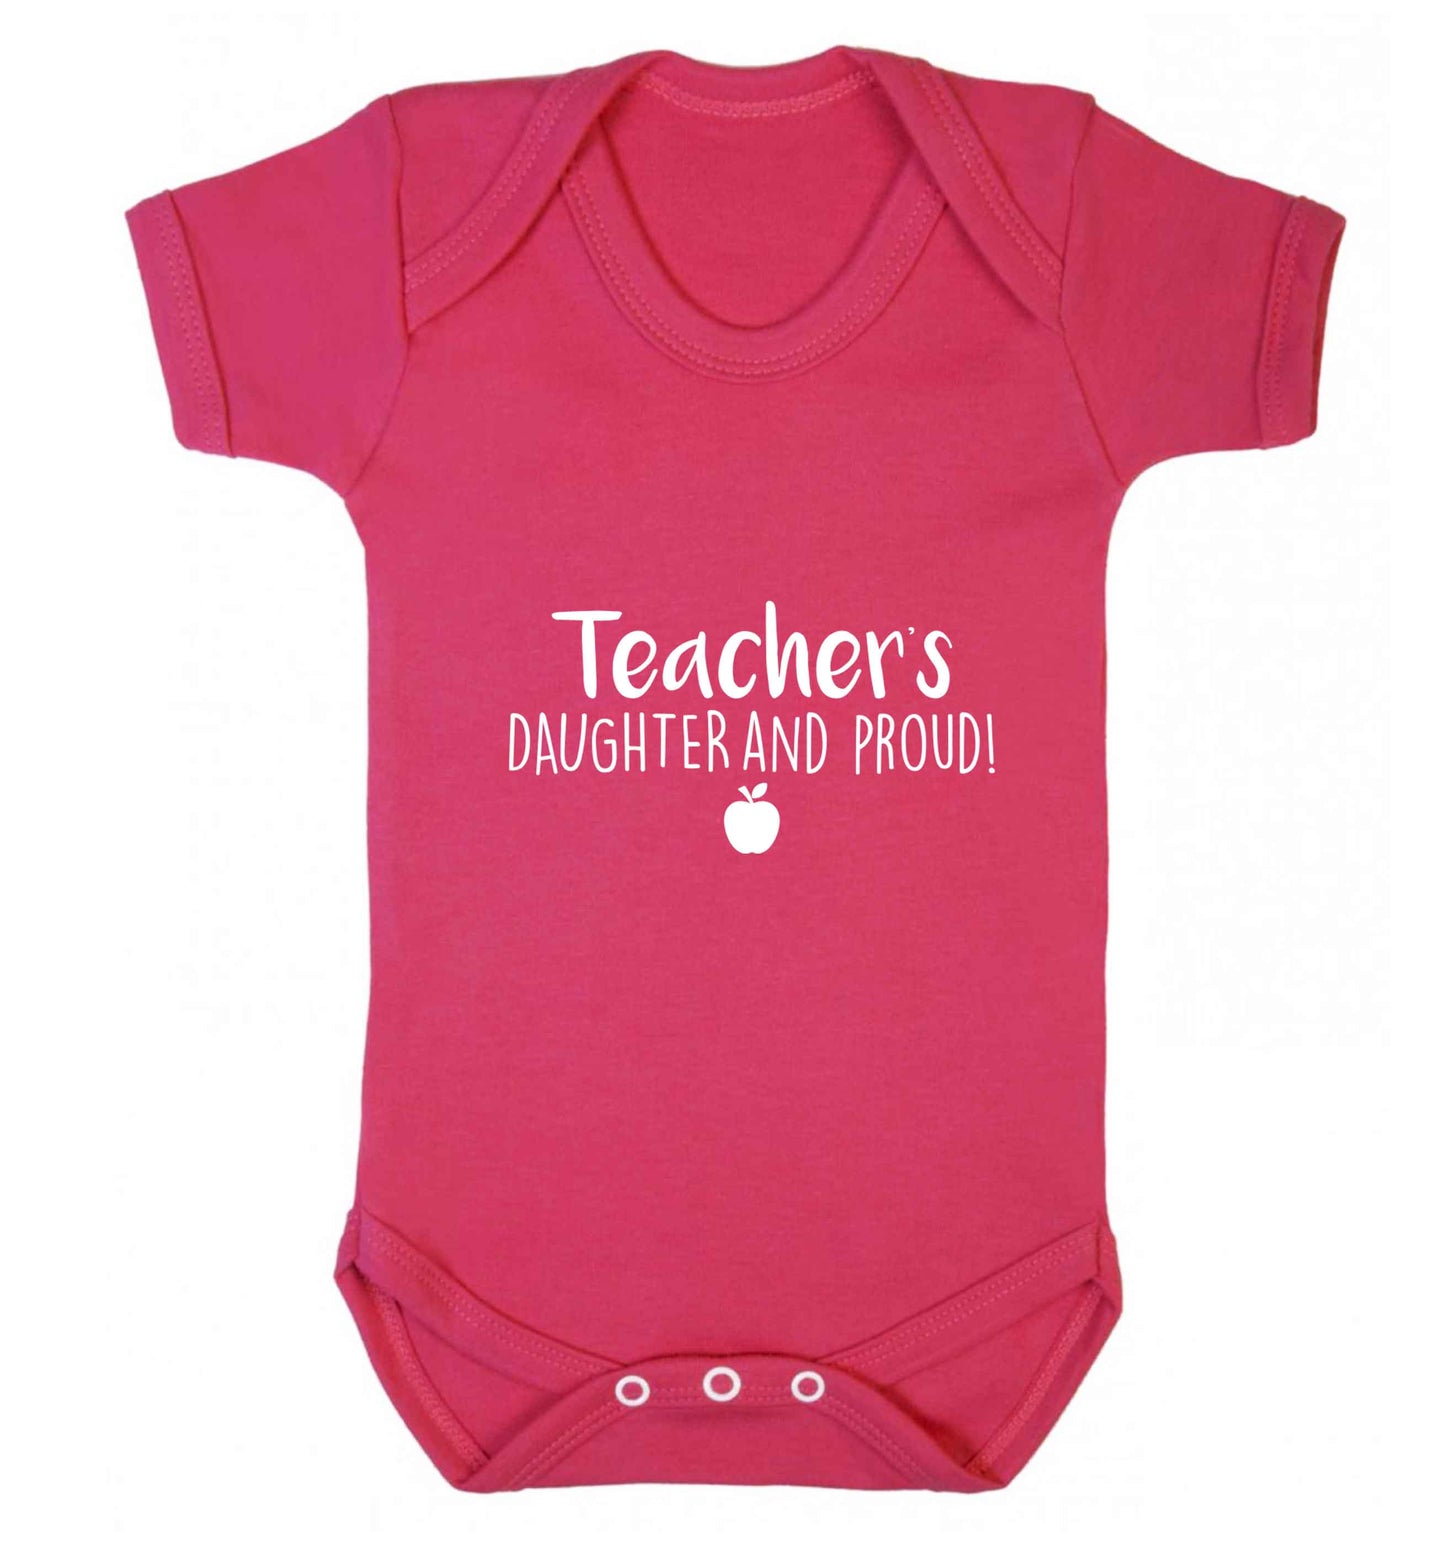 Teachers daughter and proud baby vest dark pink 18-24 months